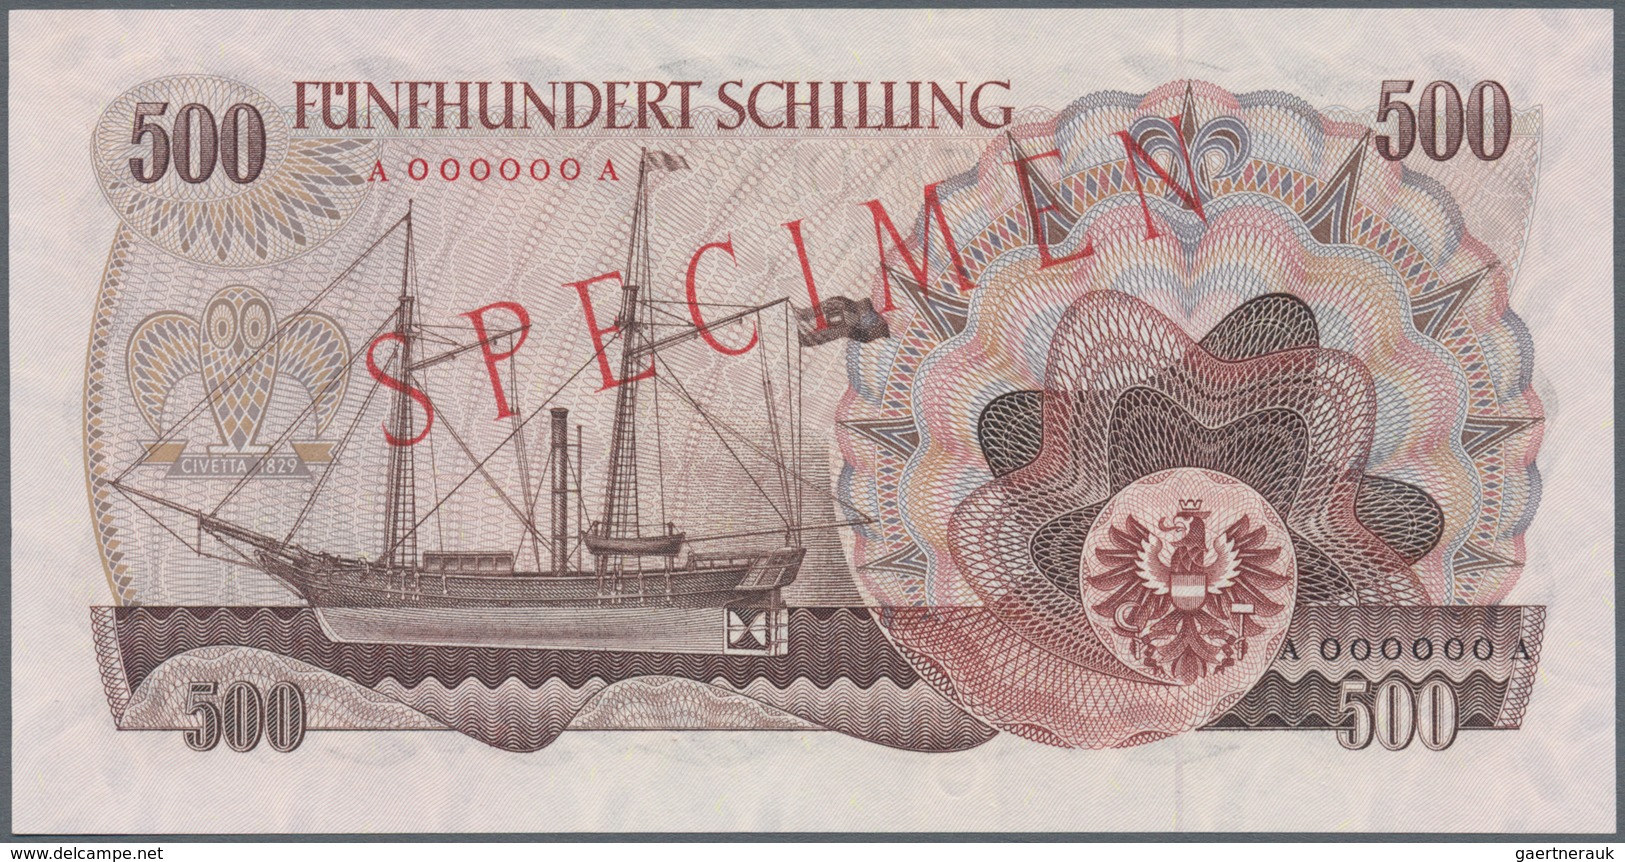 01083 Austria / Österreich: 500 Schilling 1965 MUSTER / SPECIMEN P. 139s In Condition: AUNC. - Austria